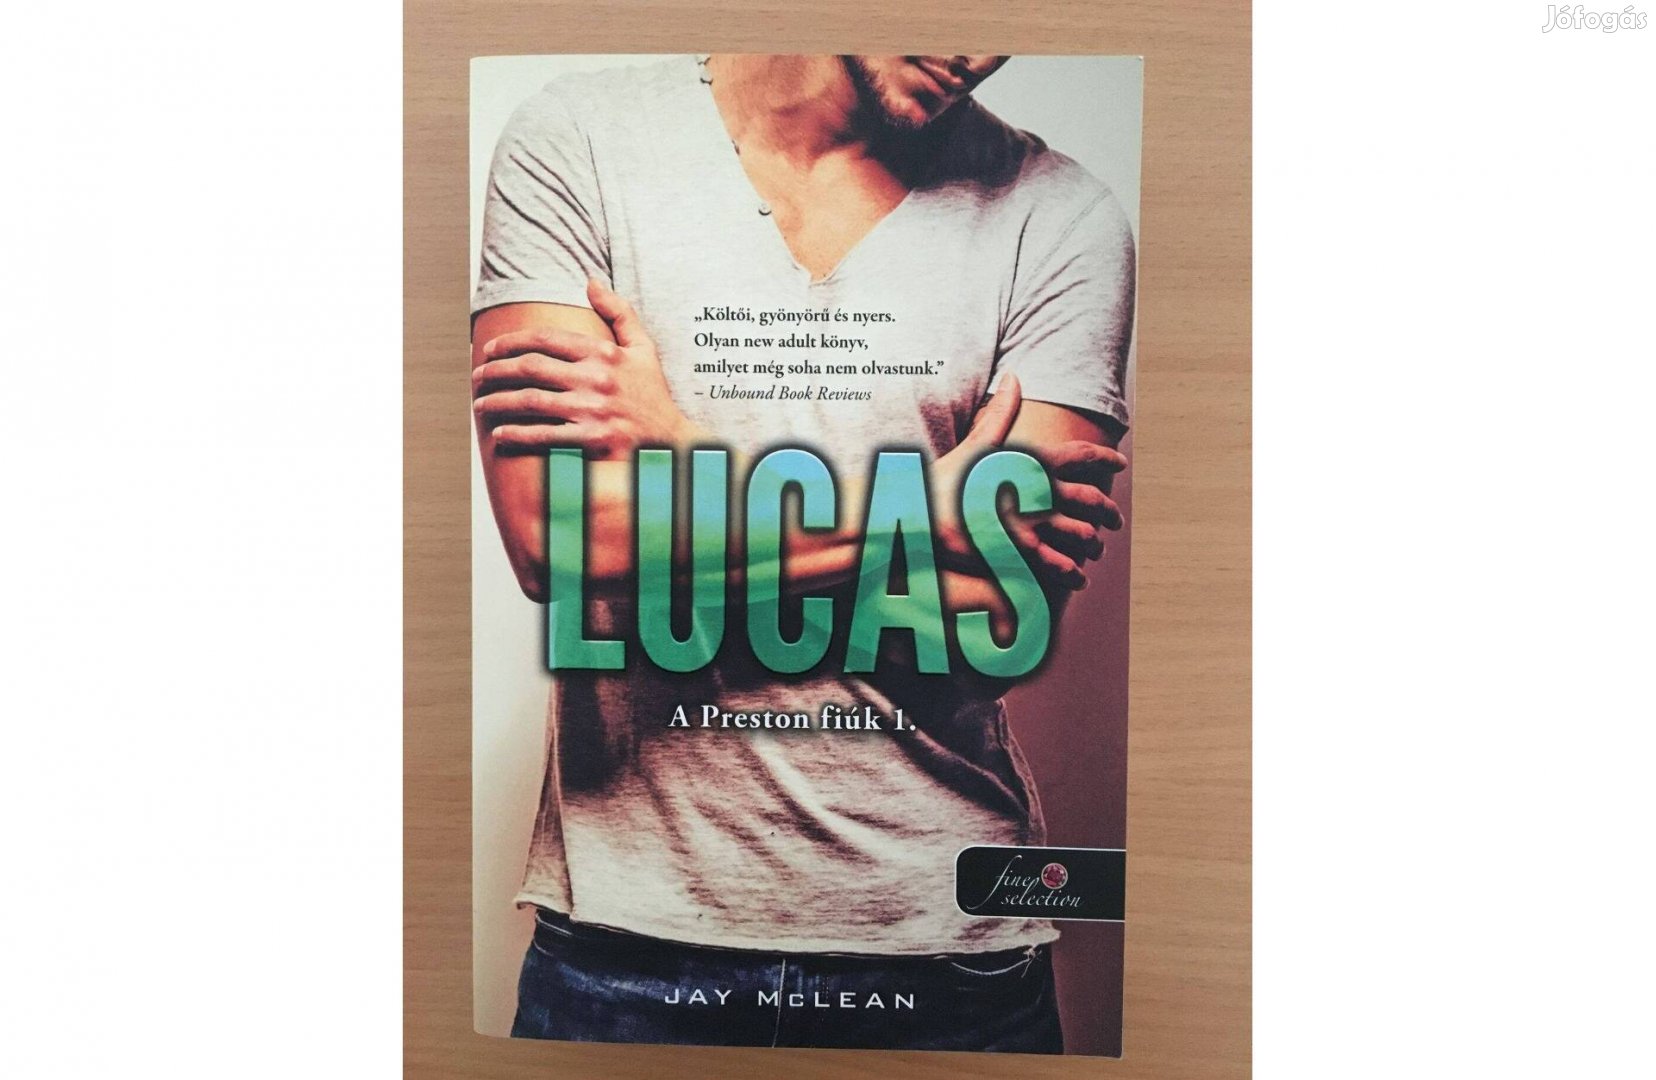 Jay Mclean: Lucas /A Preston fiúk 1./